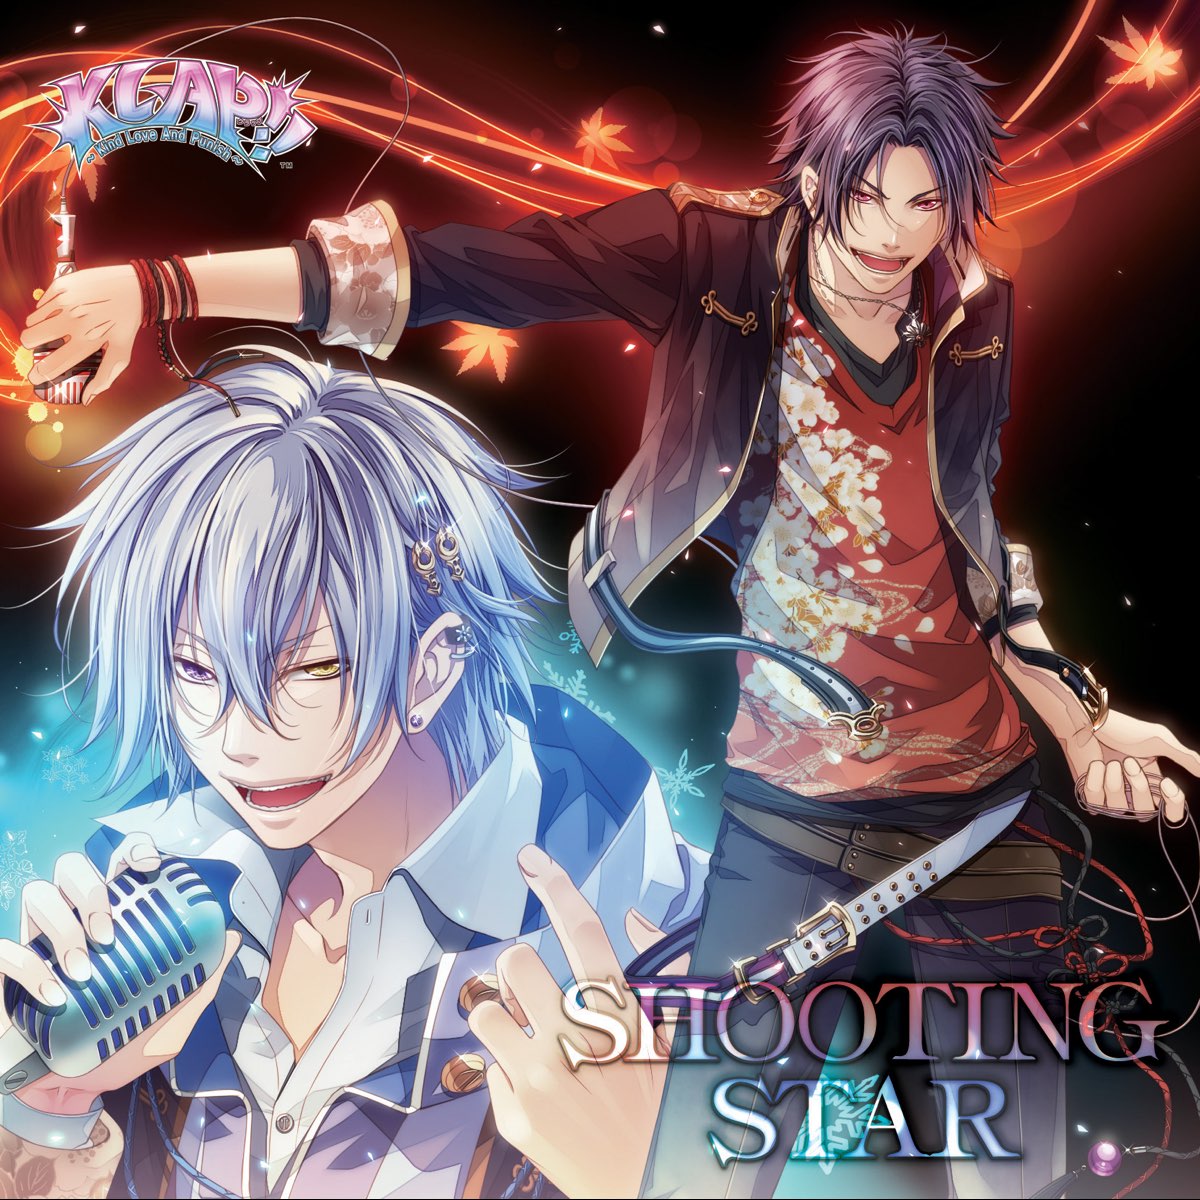 SHOOTING STAR - EP by 美作燈真(CV:森久保祥太郎)周防壮介(CV:梶 裕貴) on Apple Music